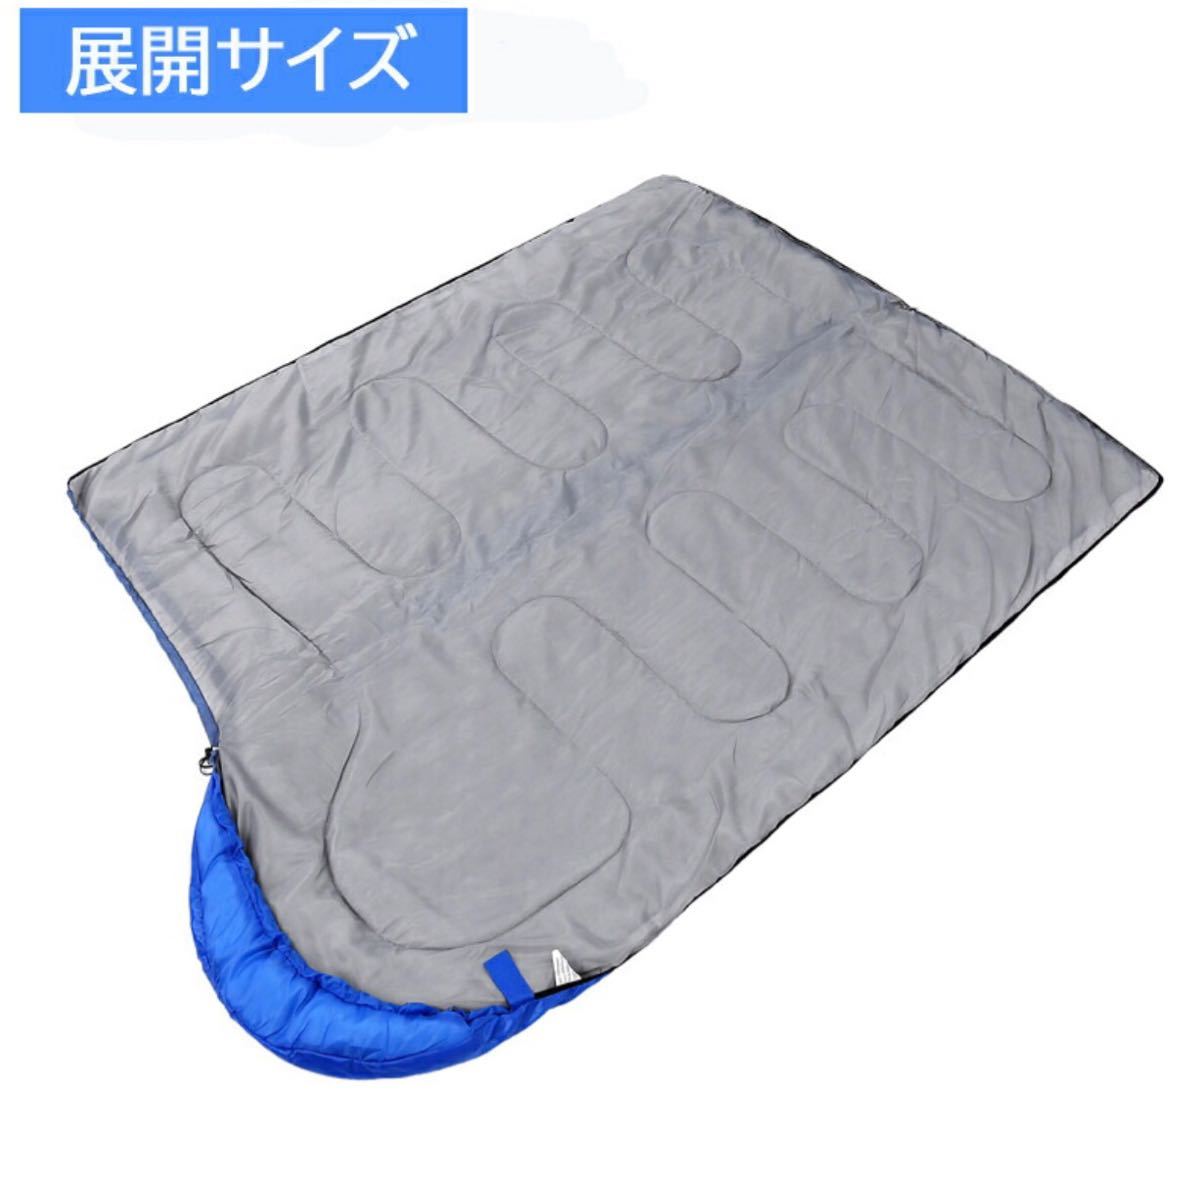 LLAP 寝袋 封筒型 1.3KG 210T防水シュラフ コンパクト軽量 保温 足伸ばし可能 アウトドア キャンプ 登山 車中泊 